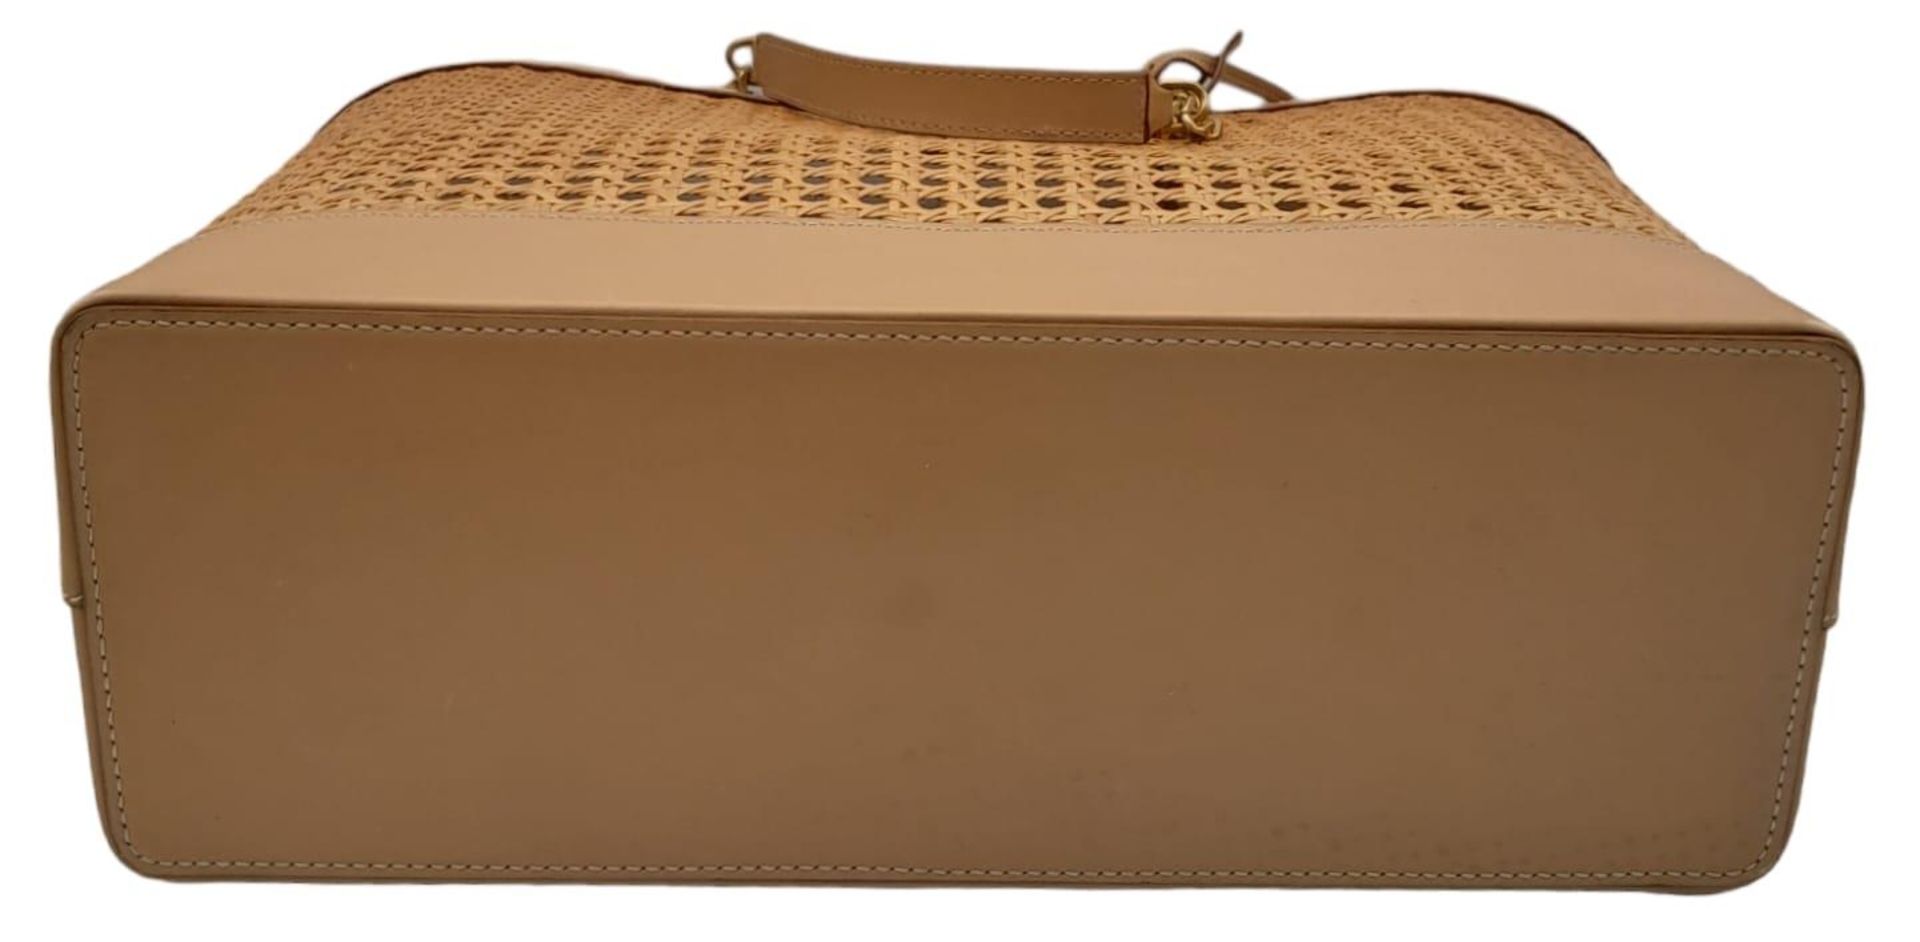 A Saint Laurent Beige Tote Bag. Woven rattan and leather trim exterior. Magnetic closure, gold-toned - Bild 5 aus 12